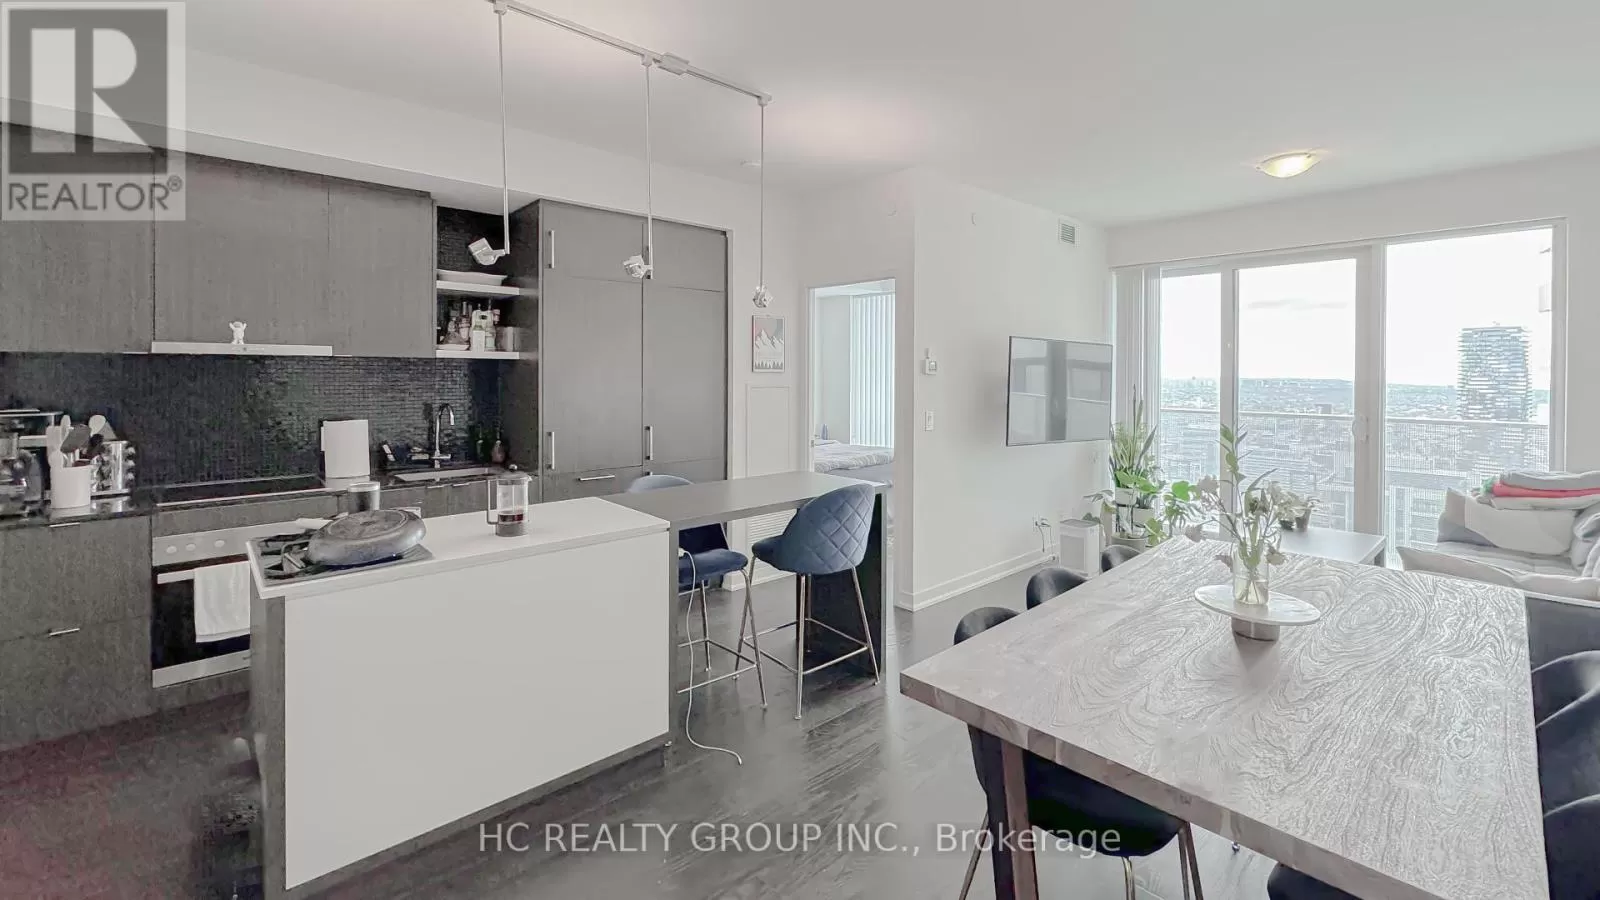 Apartment for rent: 6506 - 100 Harbour Street, Toronto, Ontario M5J 0B5